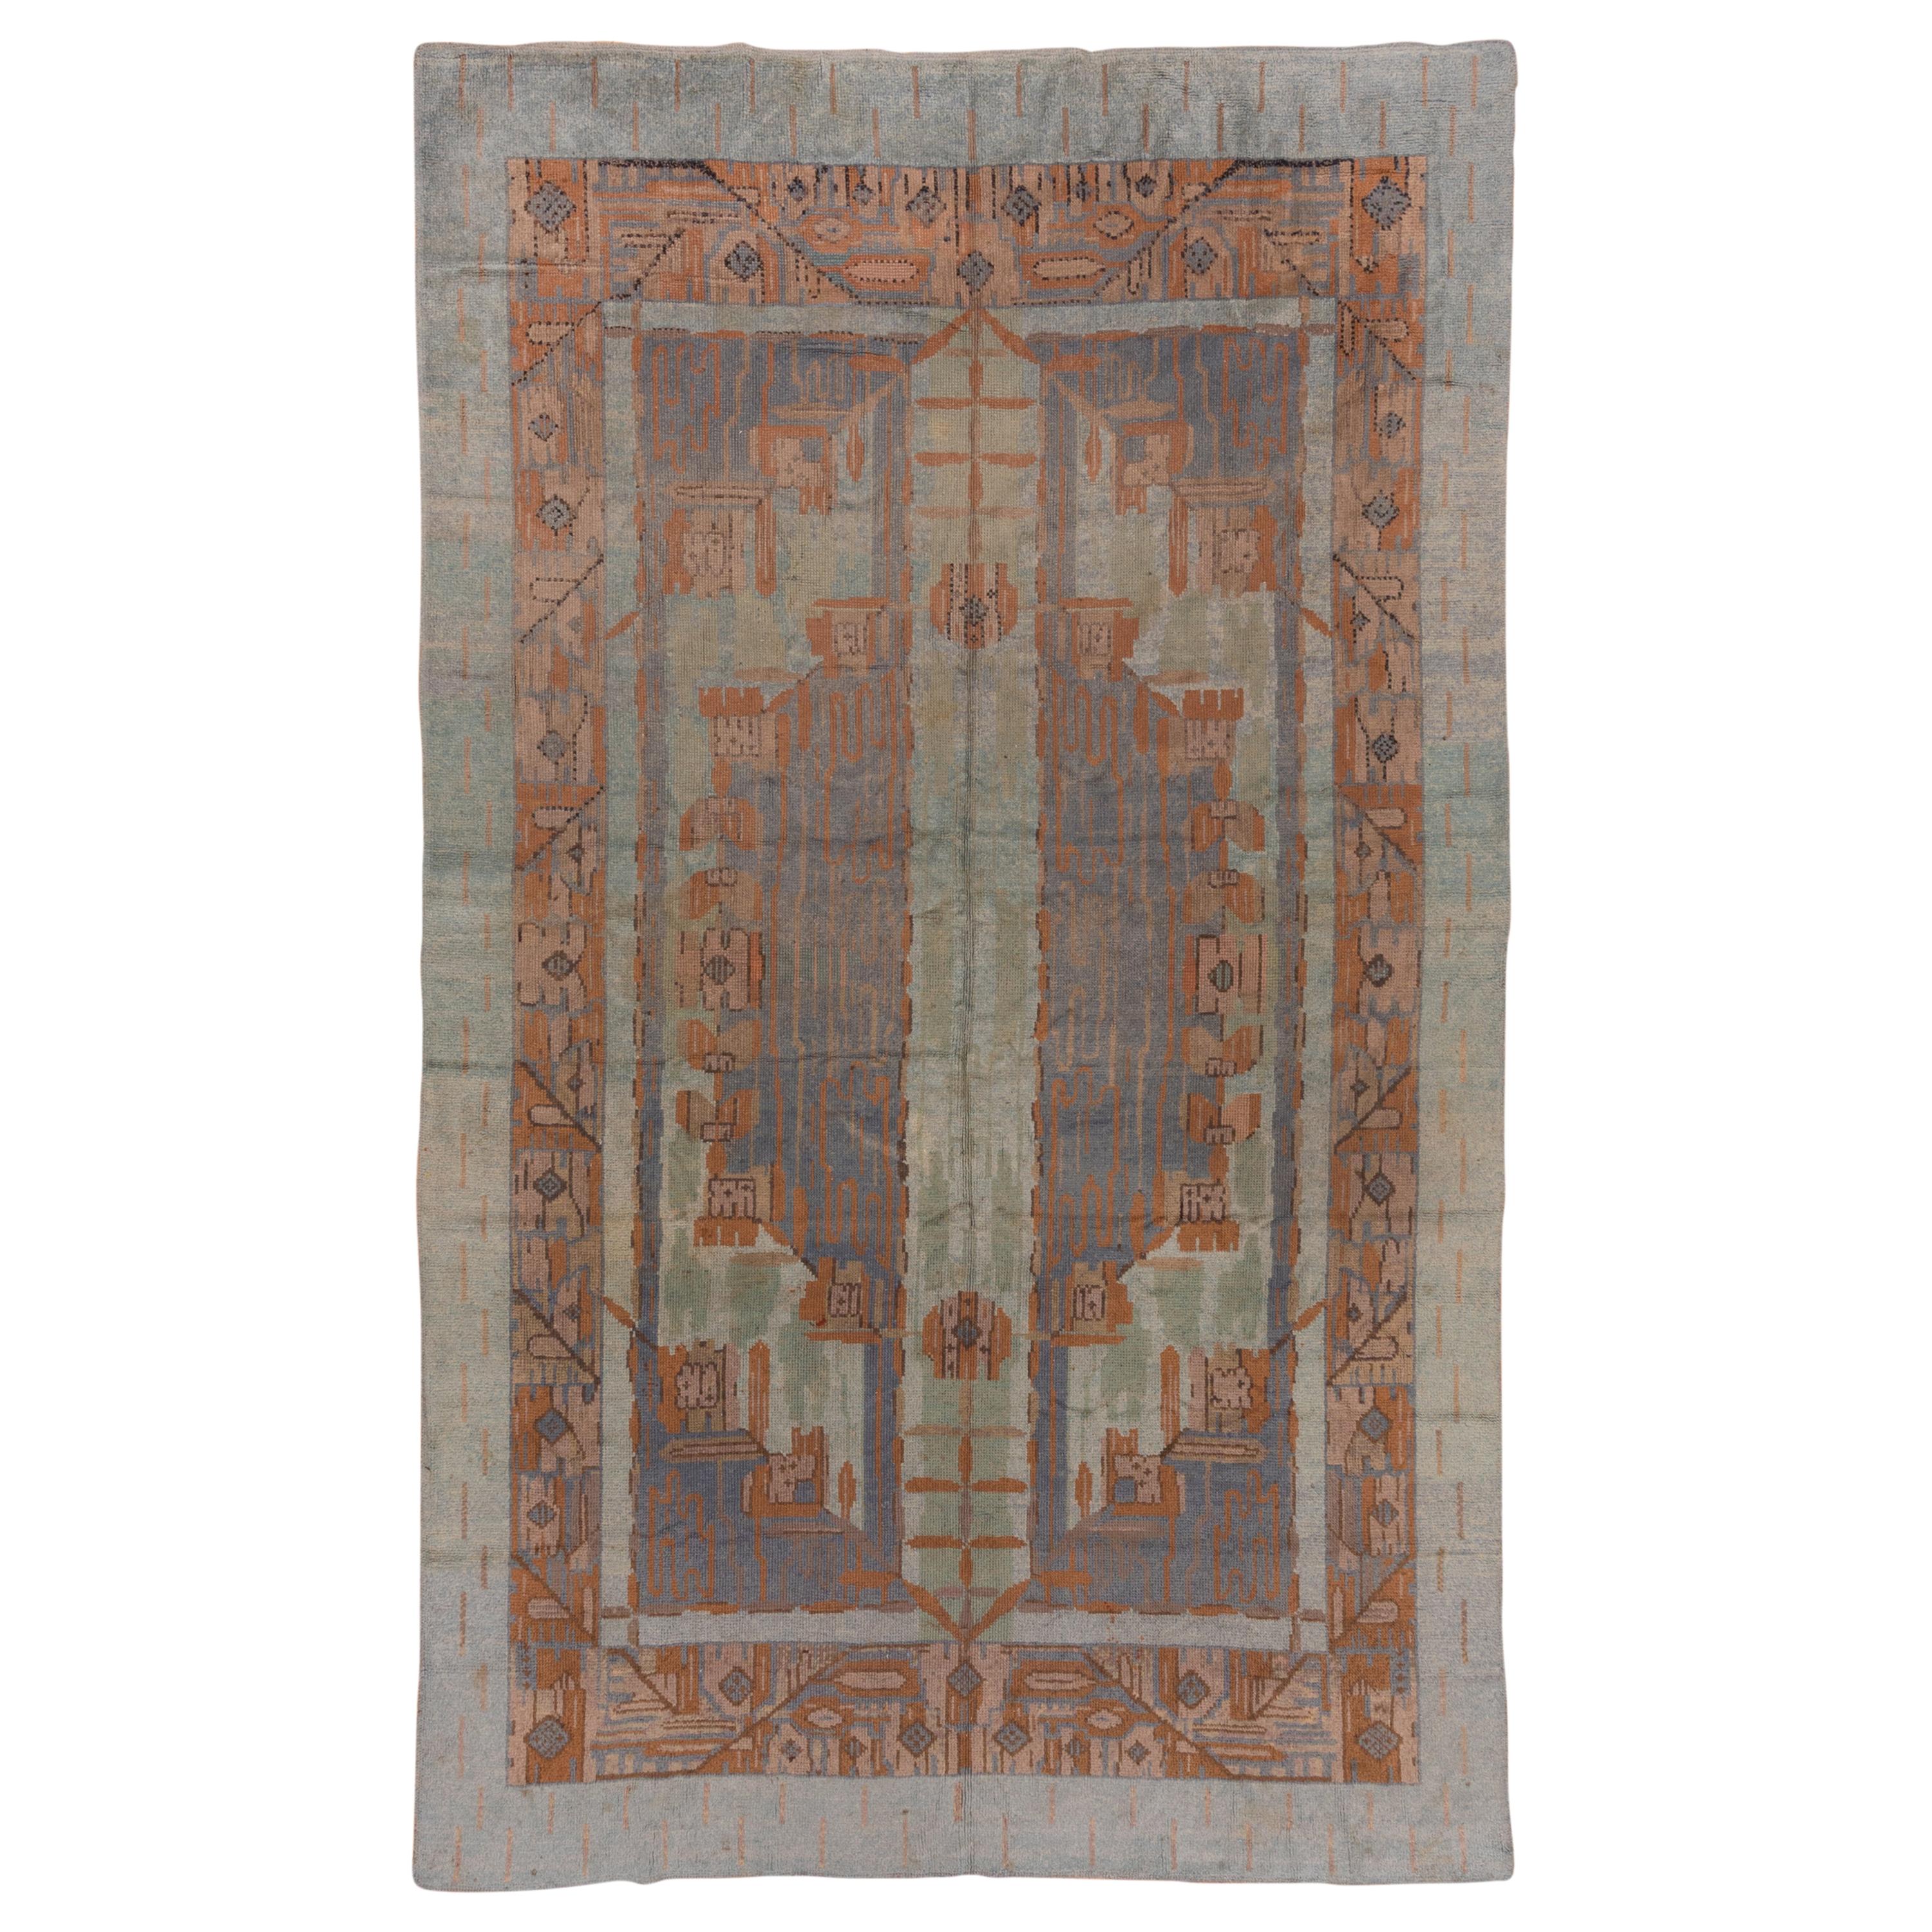 Rare Antique Art Deco Swedish Carpet, Pastel Colors, Soft Tones